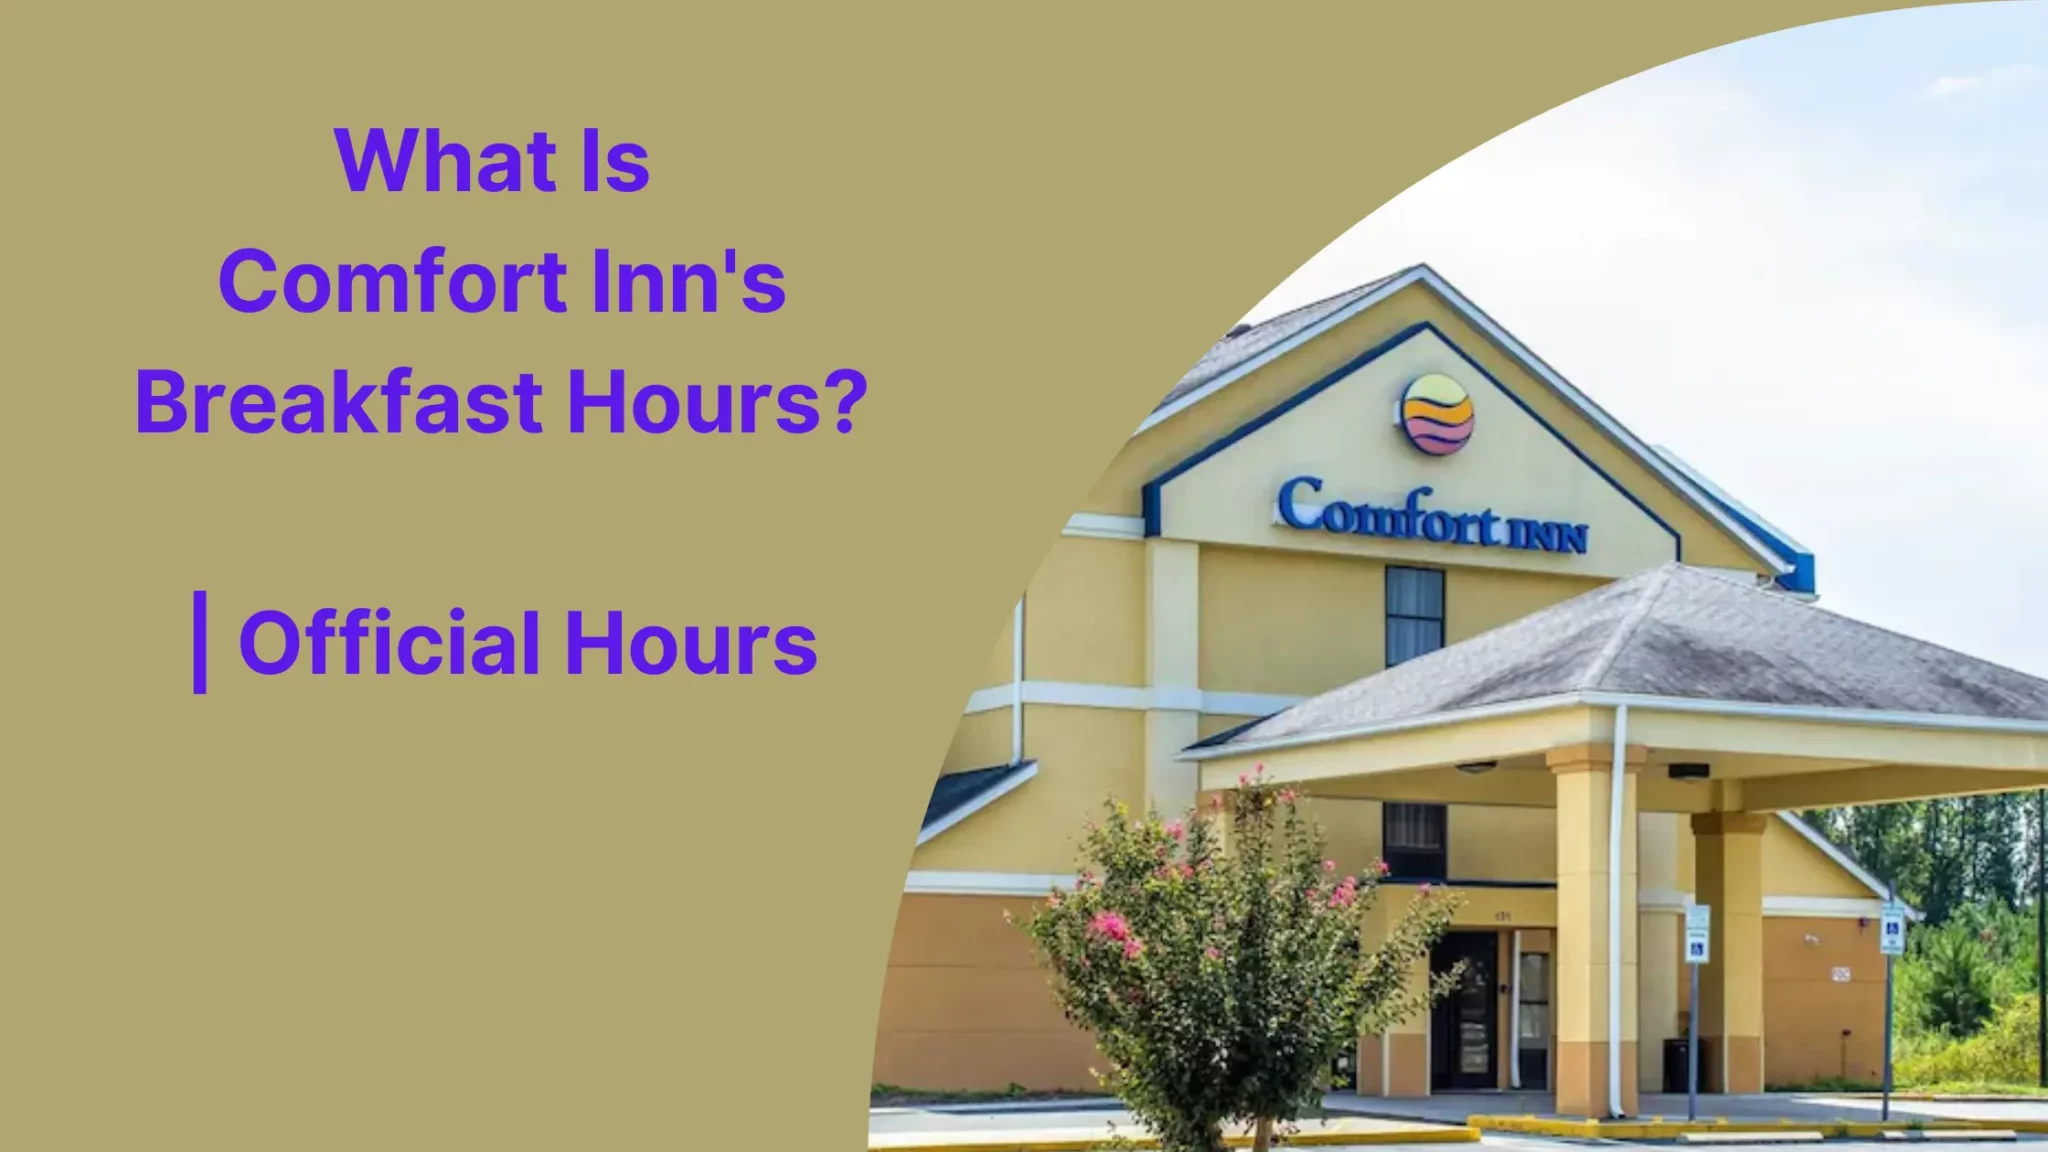 What Is Comfort Inn's Breakfast Hours?